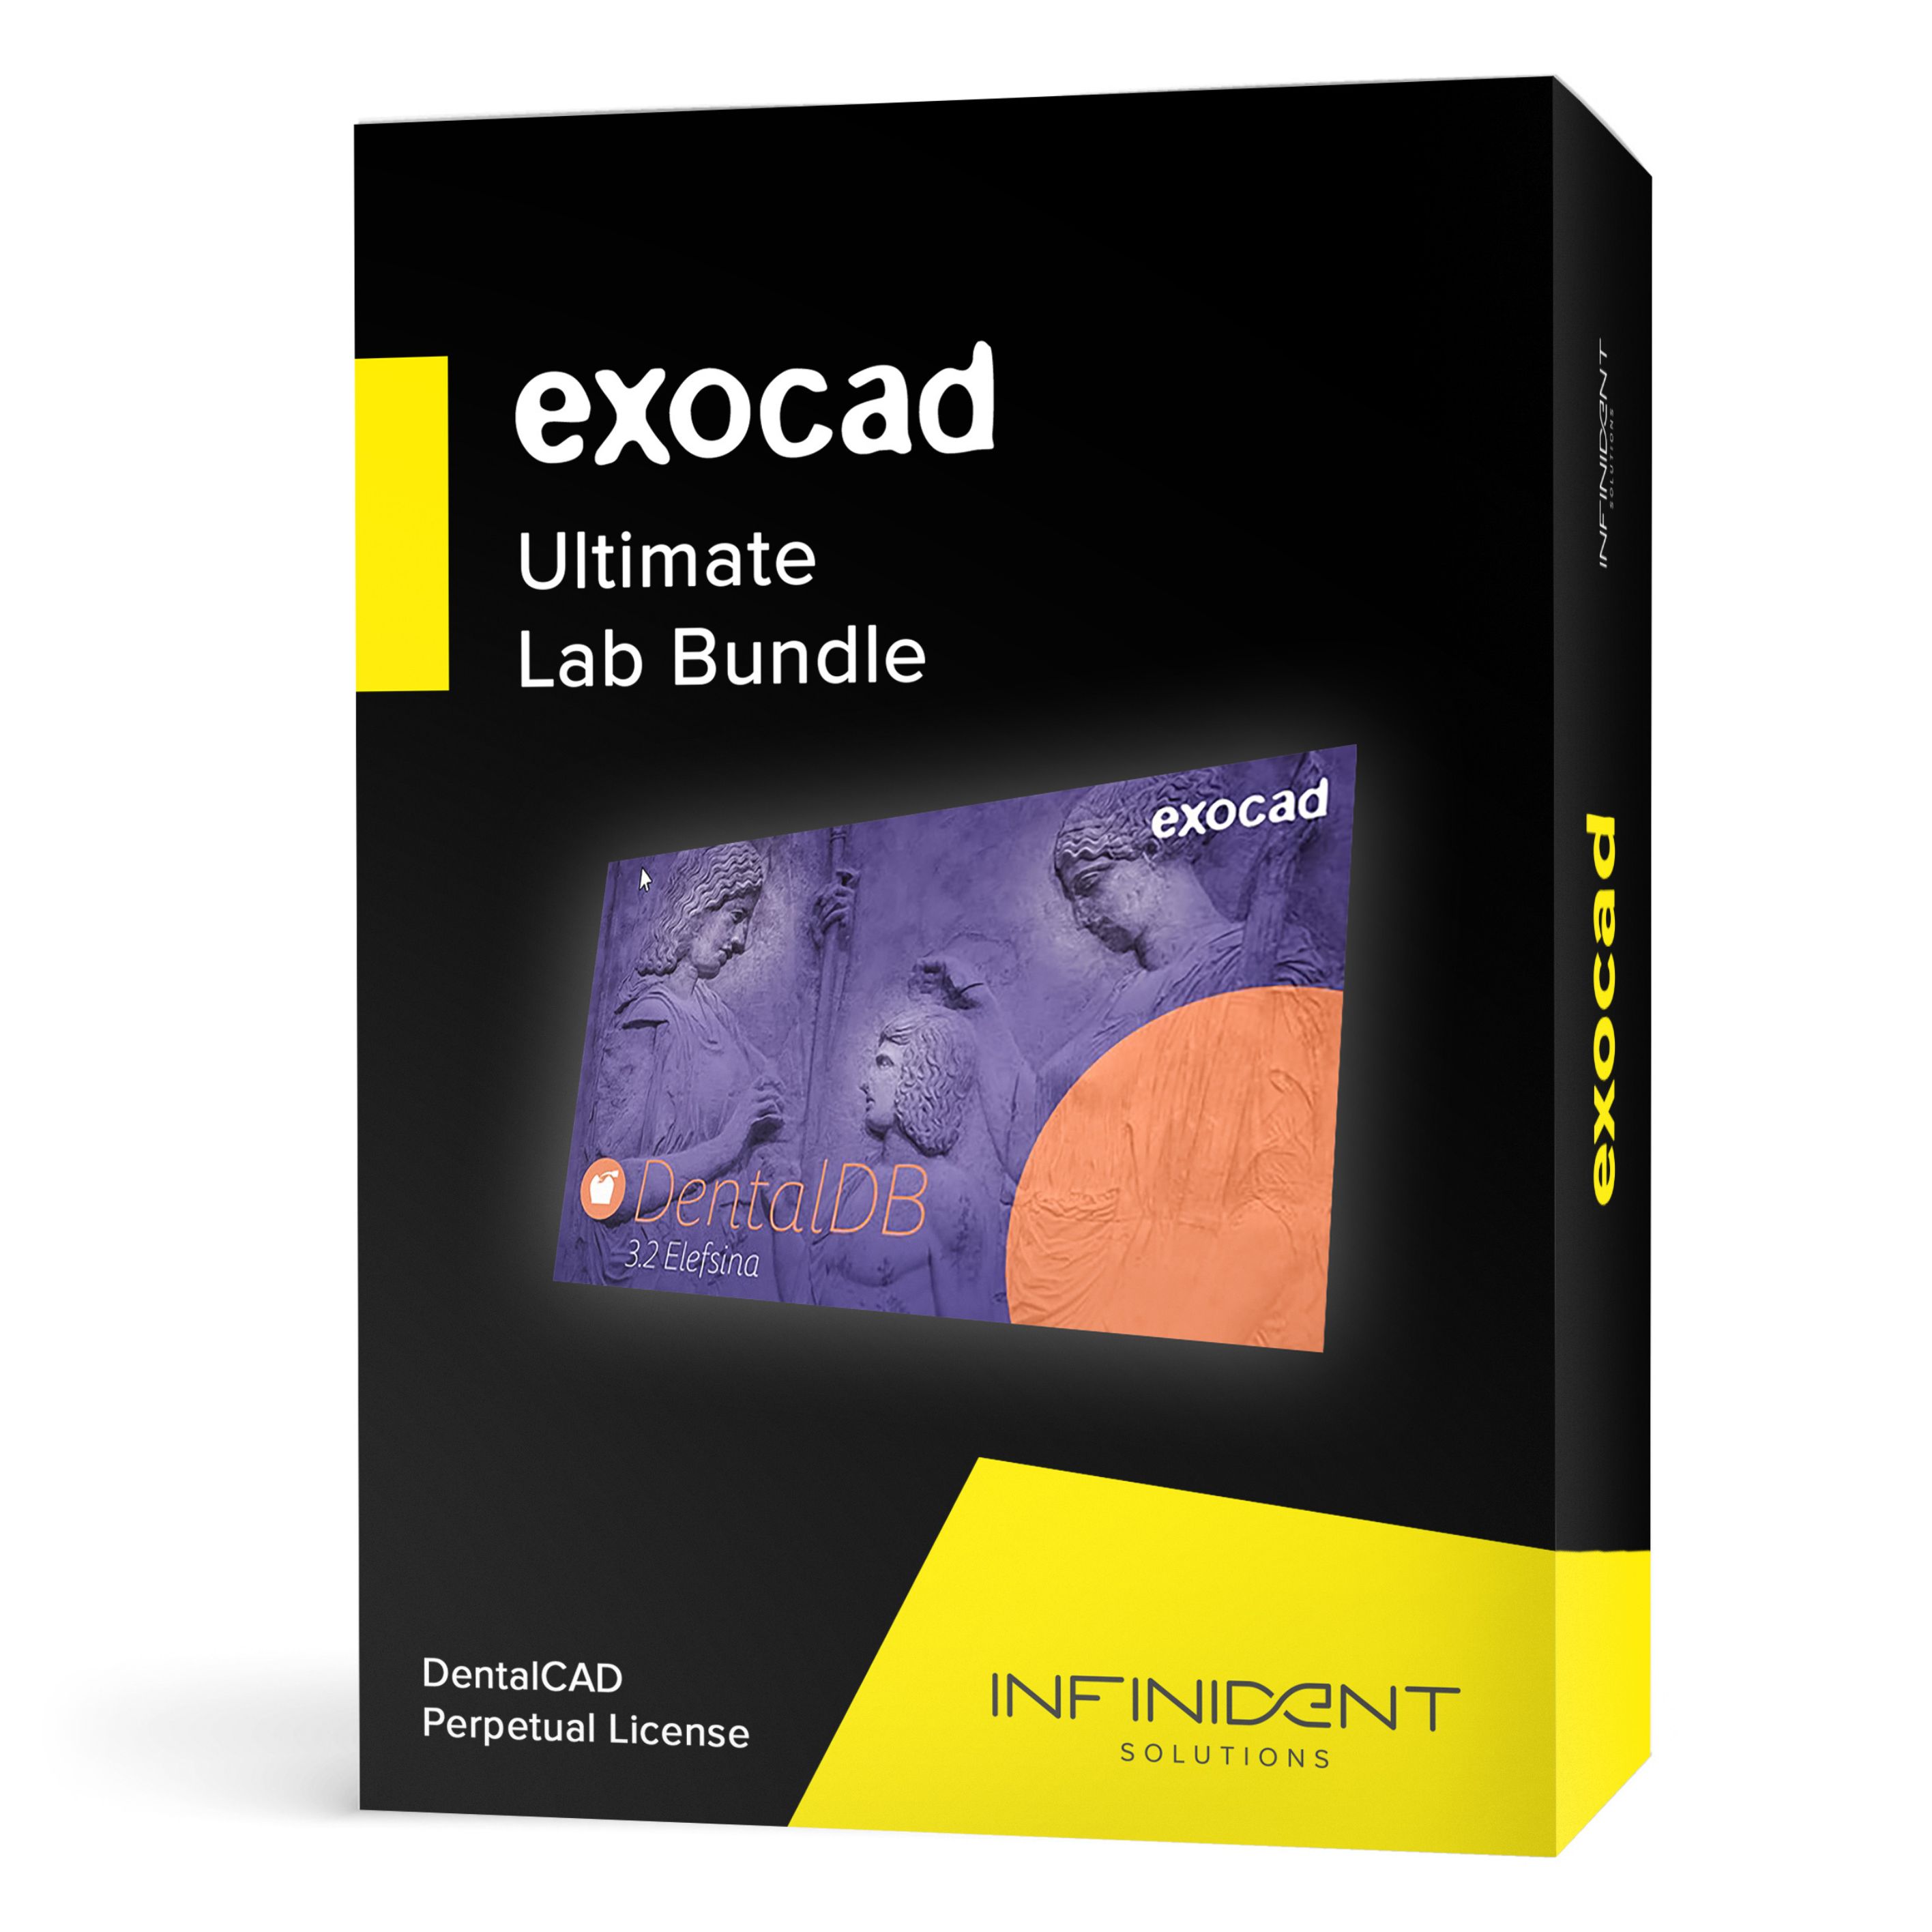 exocad Ultimate Lab Bundle